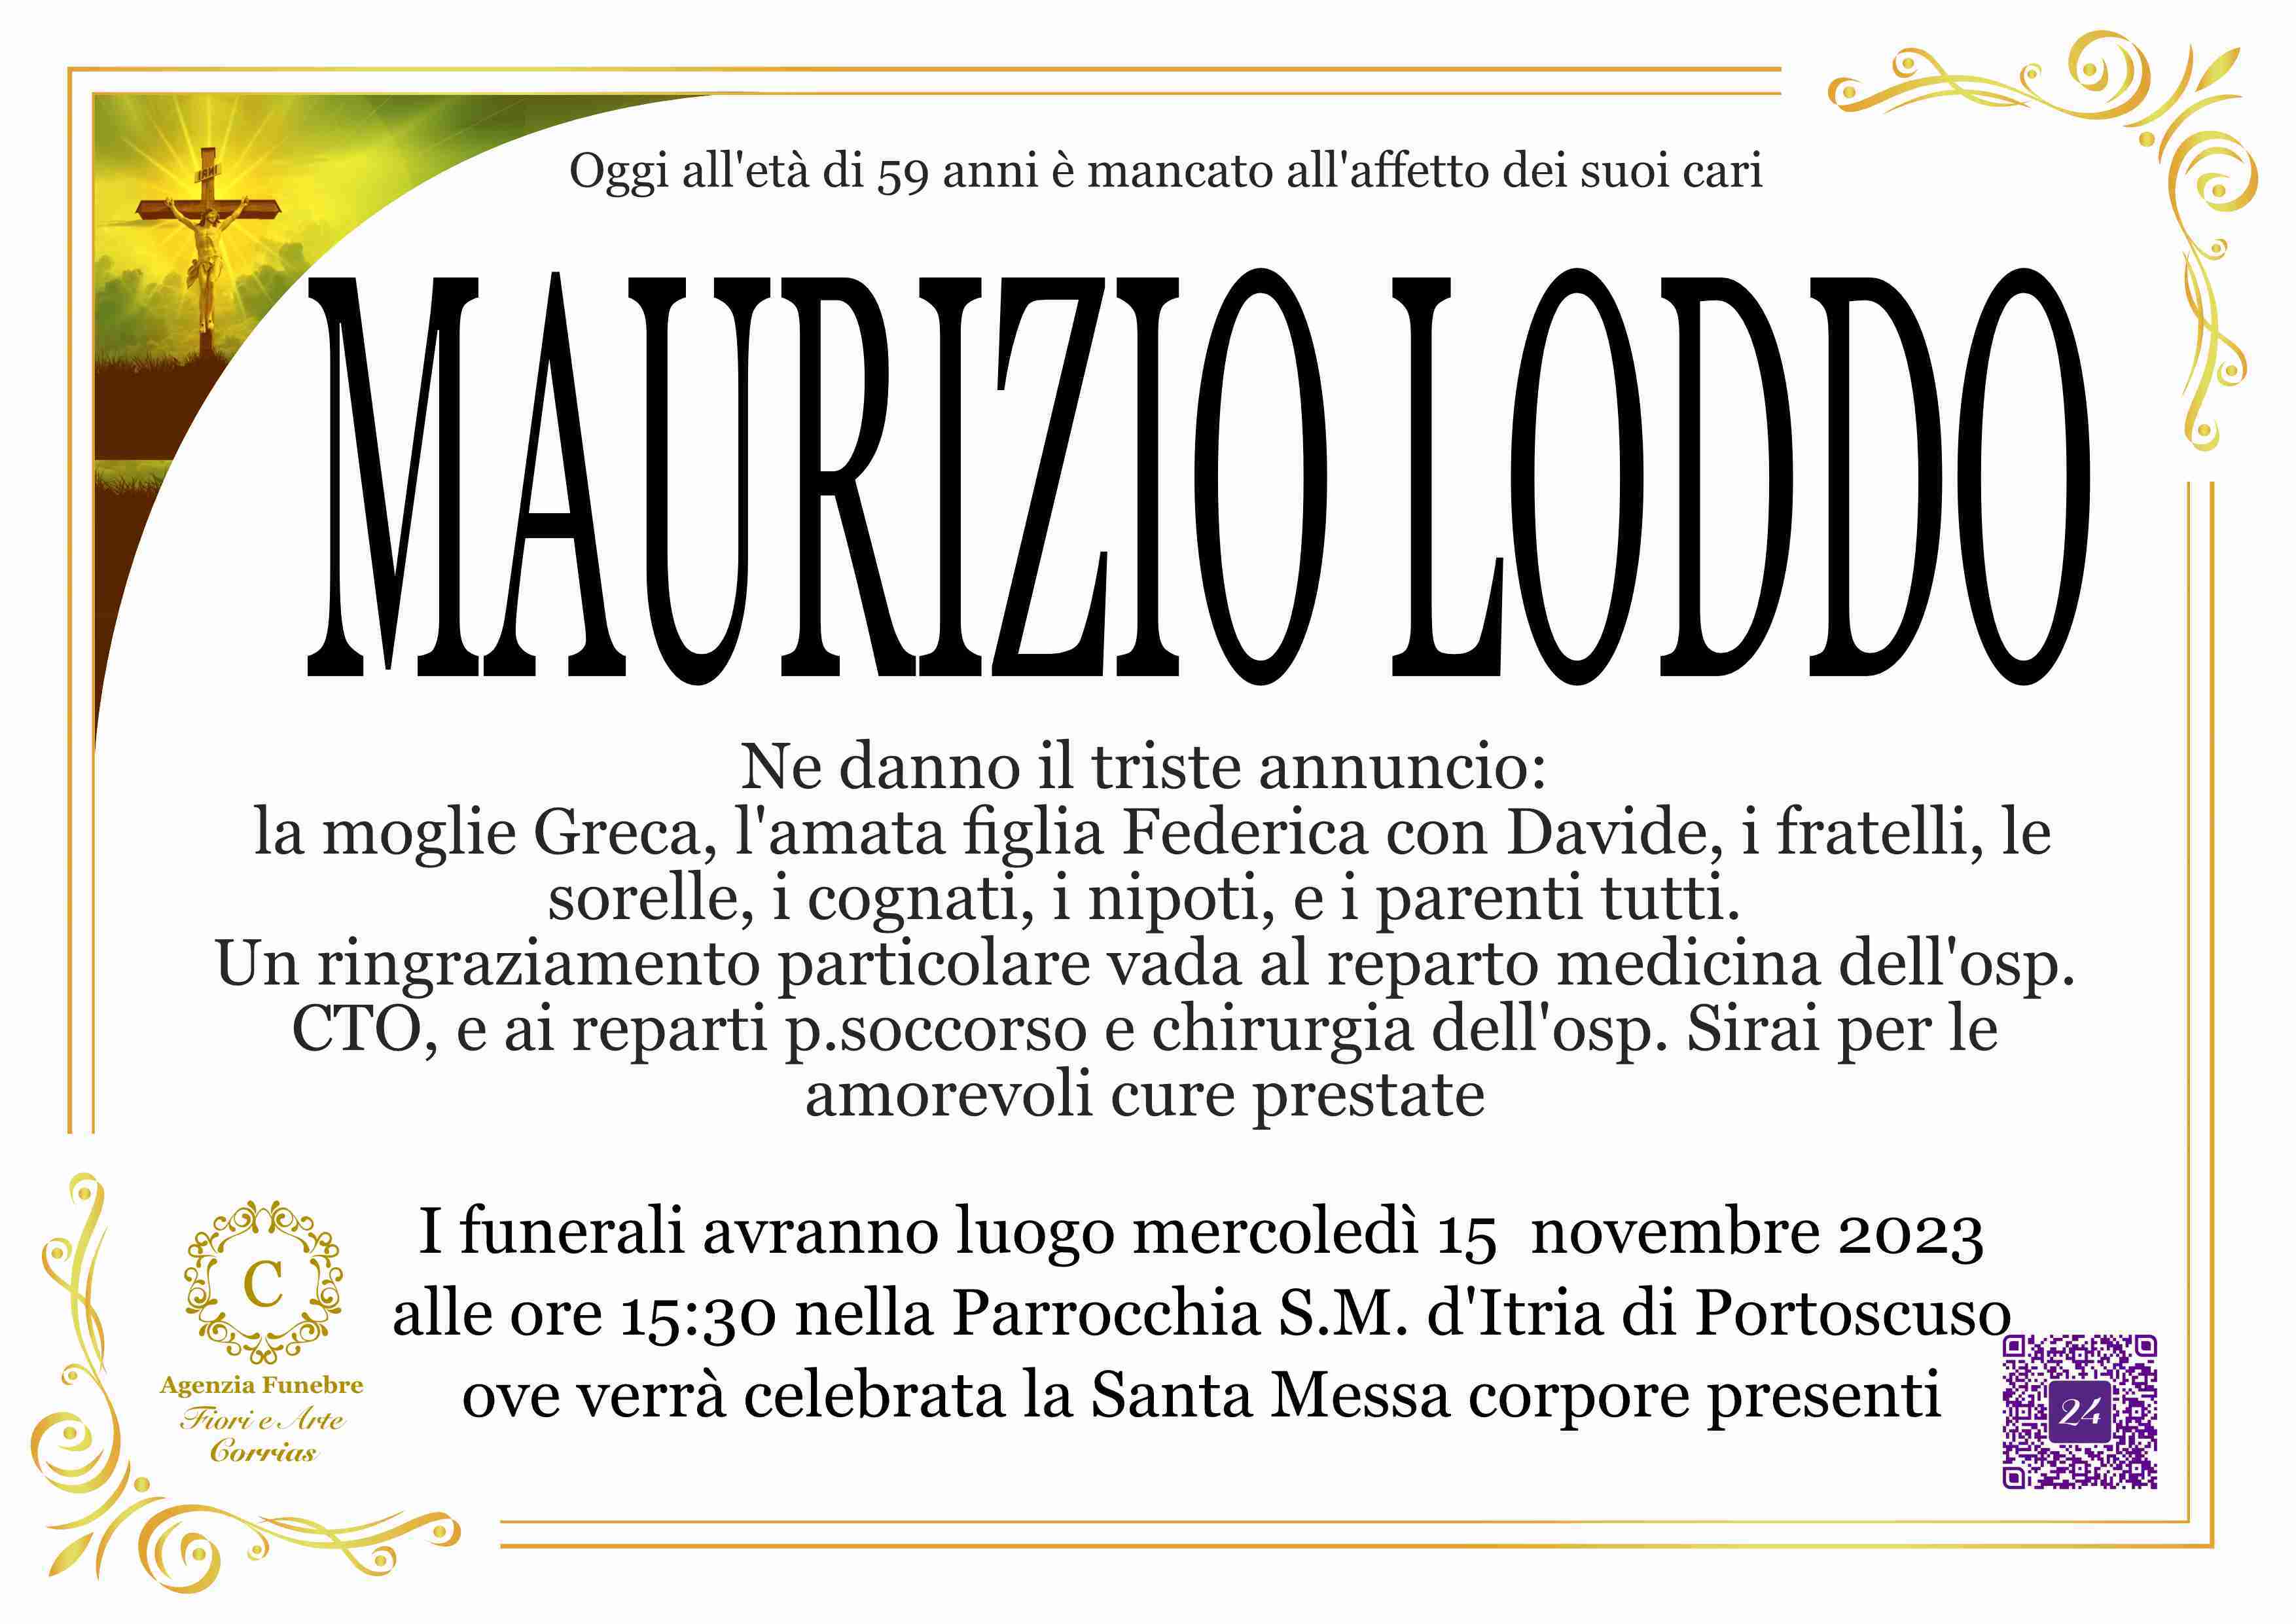 Maurizio Loddo